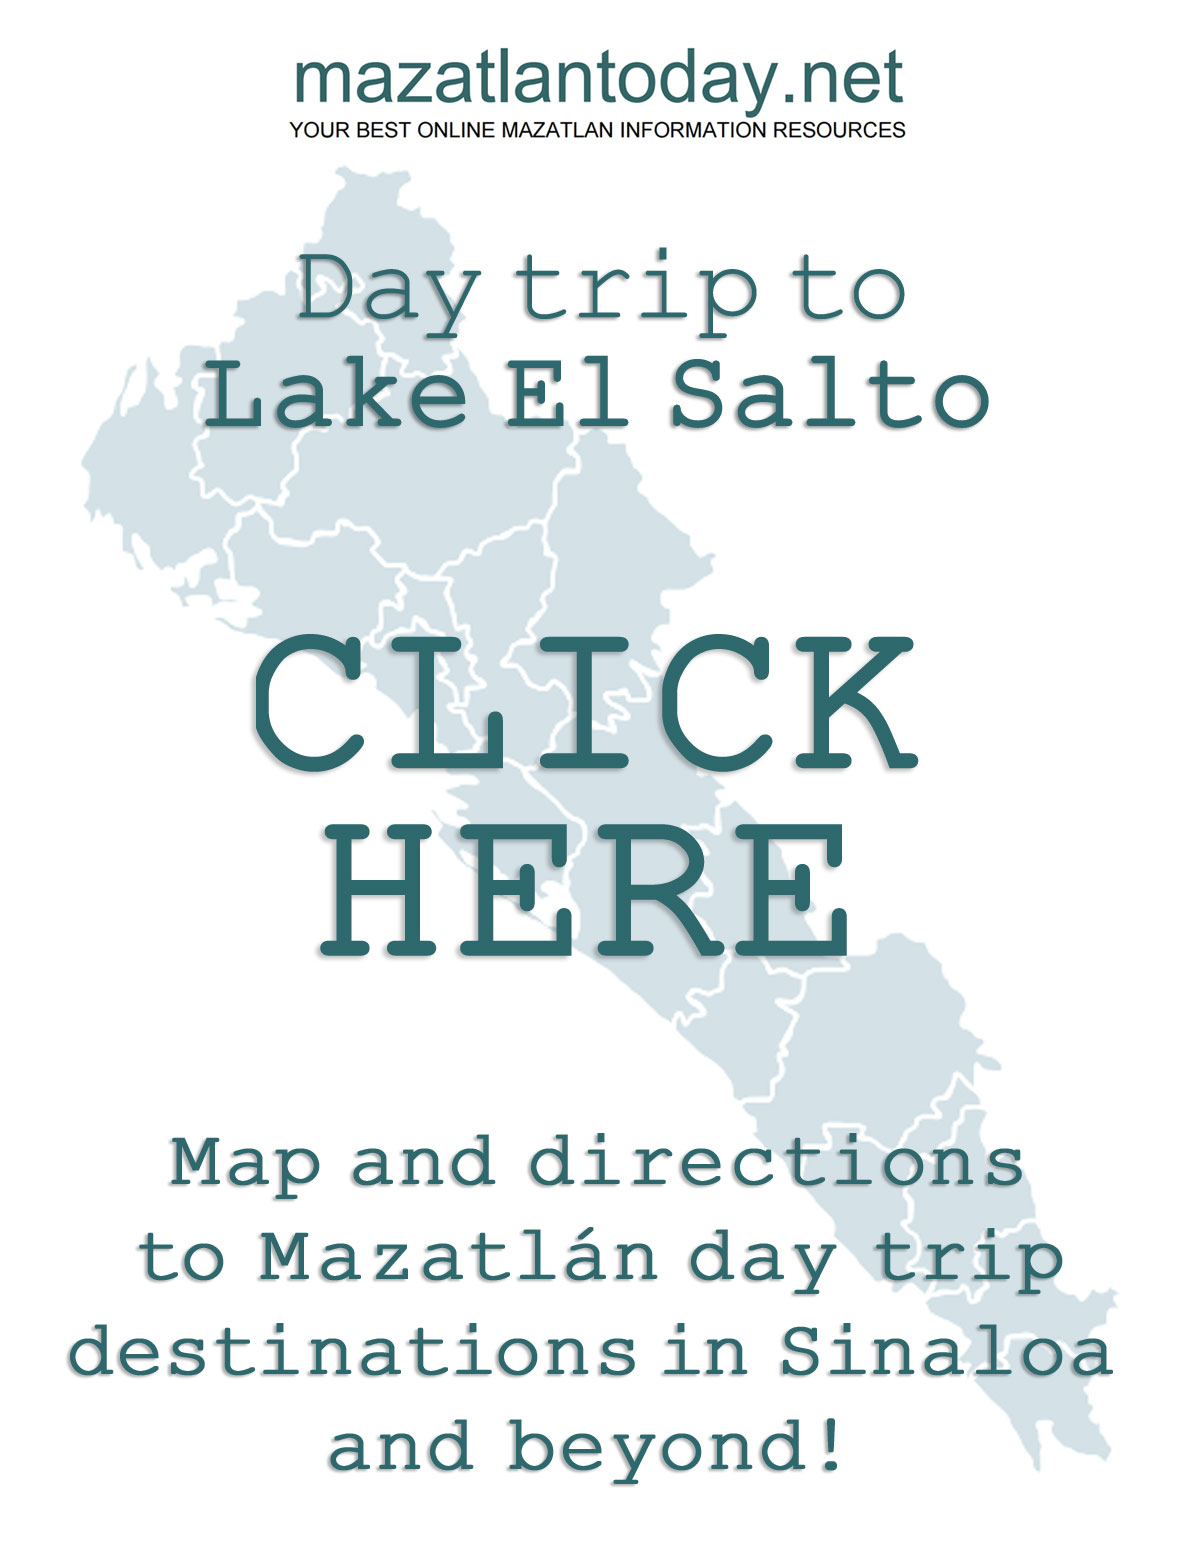 Download free Mazatlan - Lake El Salto day trip map and directions